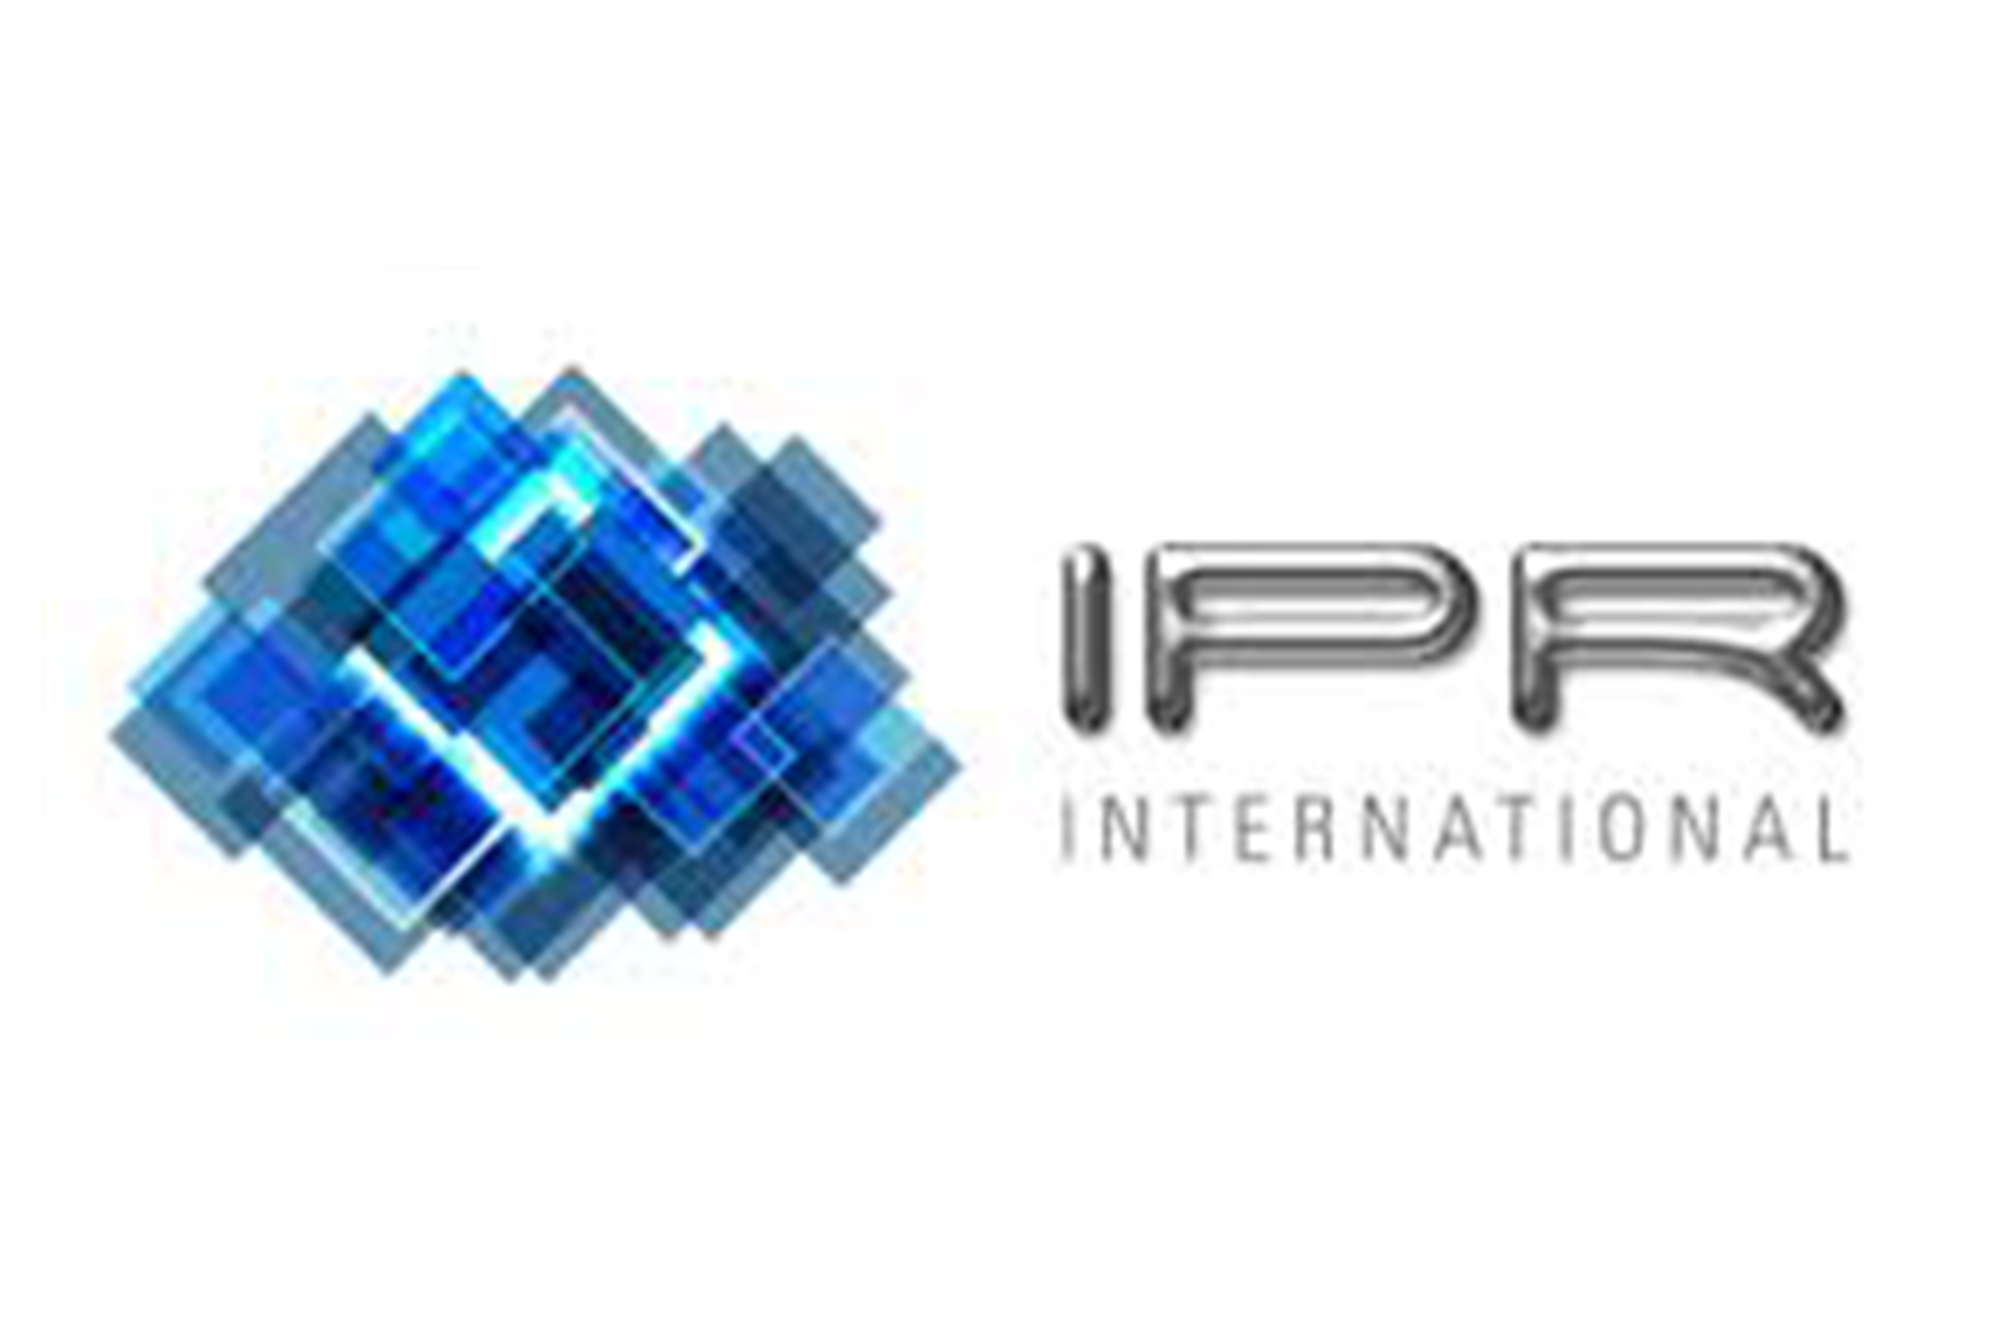 avant-IPR-International-logo.png